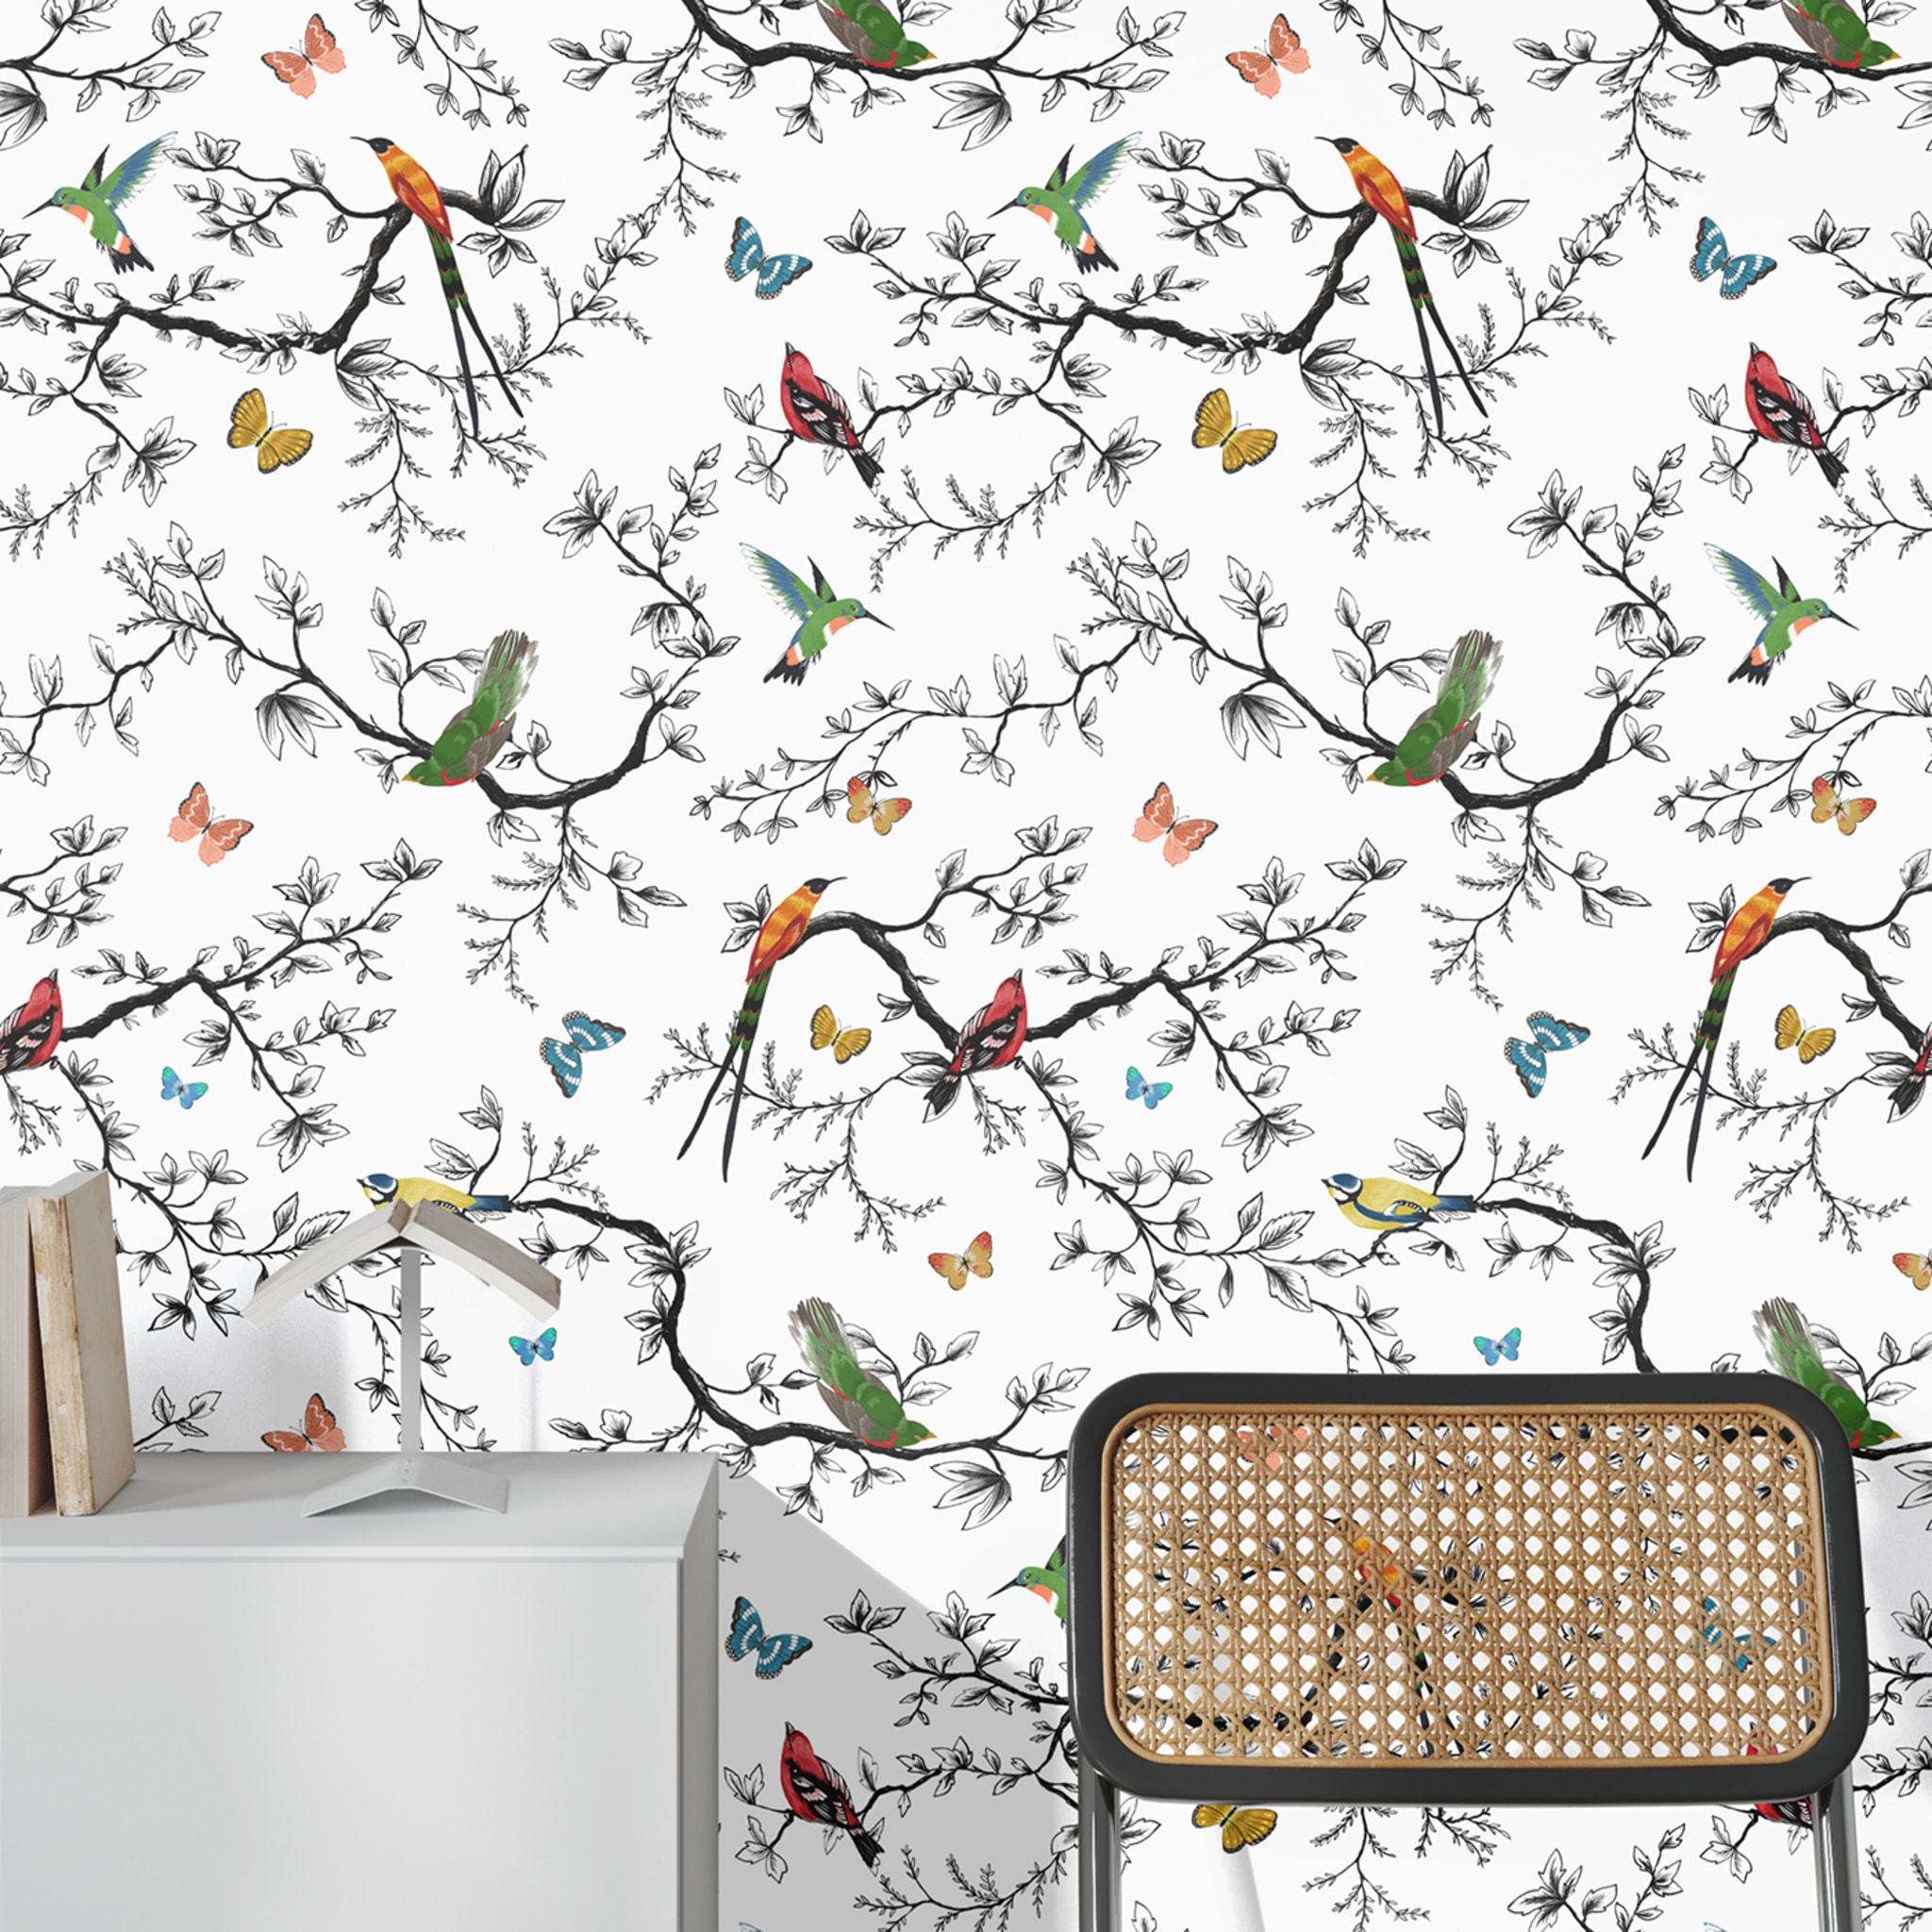 Whimsical Birds and Butterflies Wallpaper - Alternative view 2